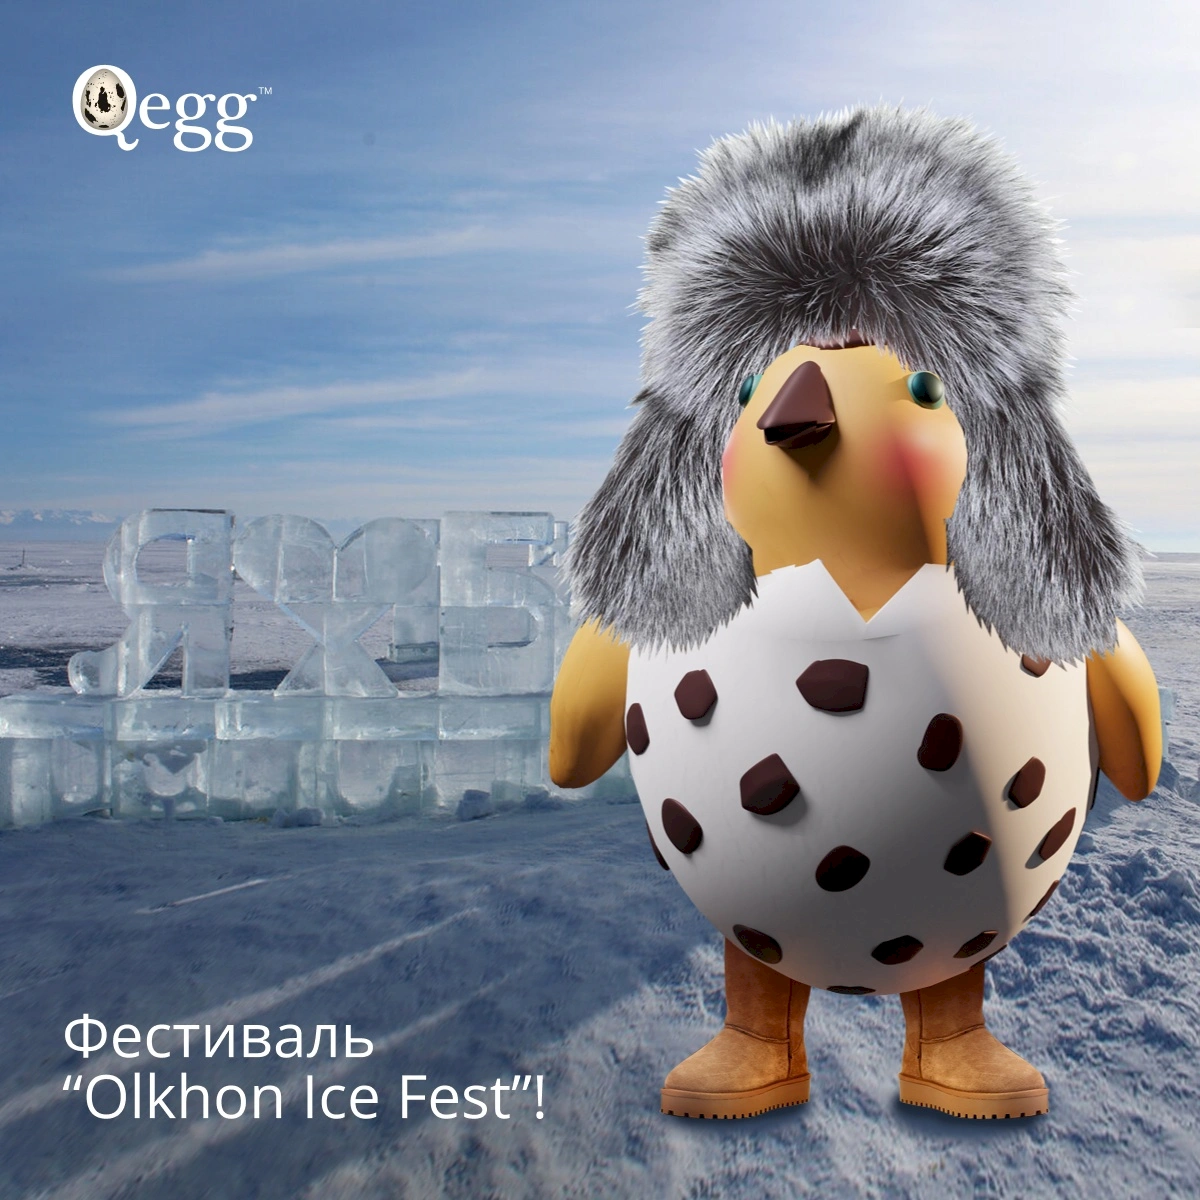 Fестиваль «Olkhon Ice Fest»